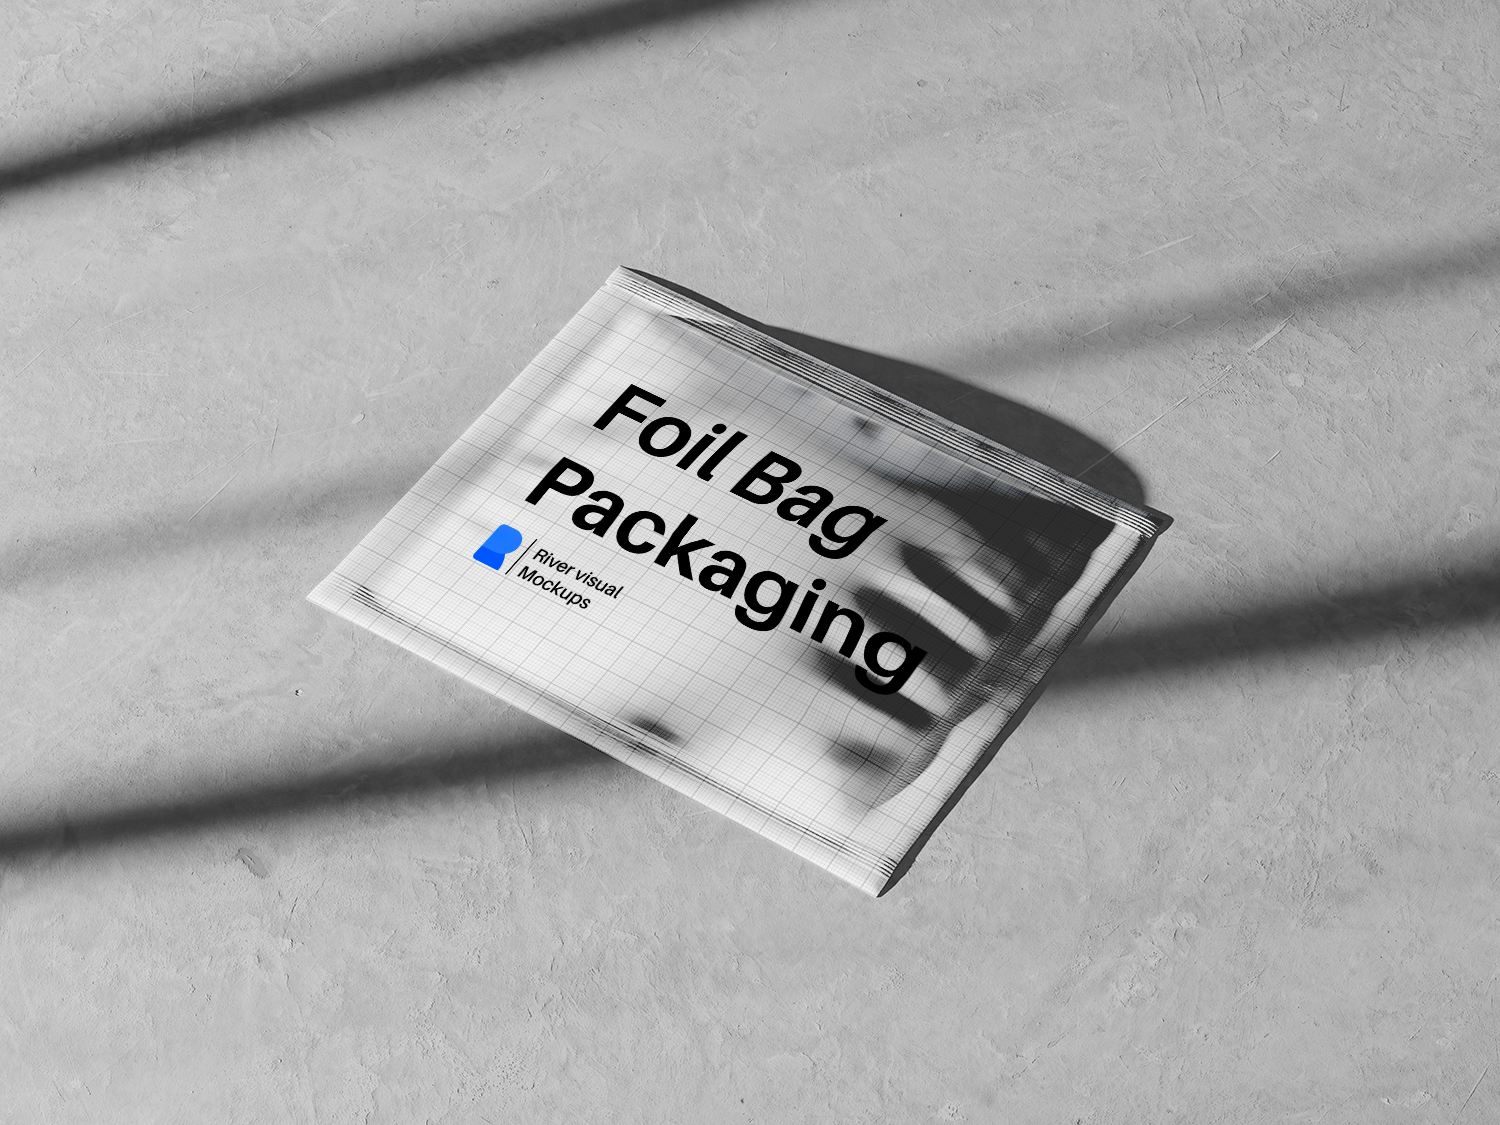 Foil Bag Packaging Free Mockup